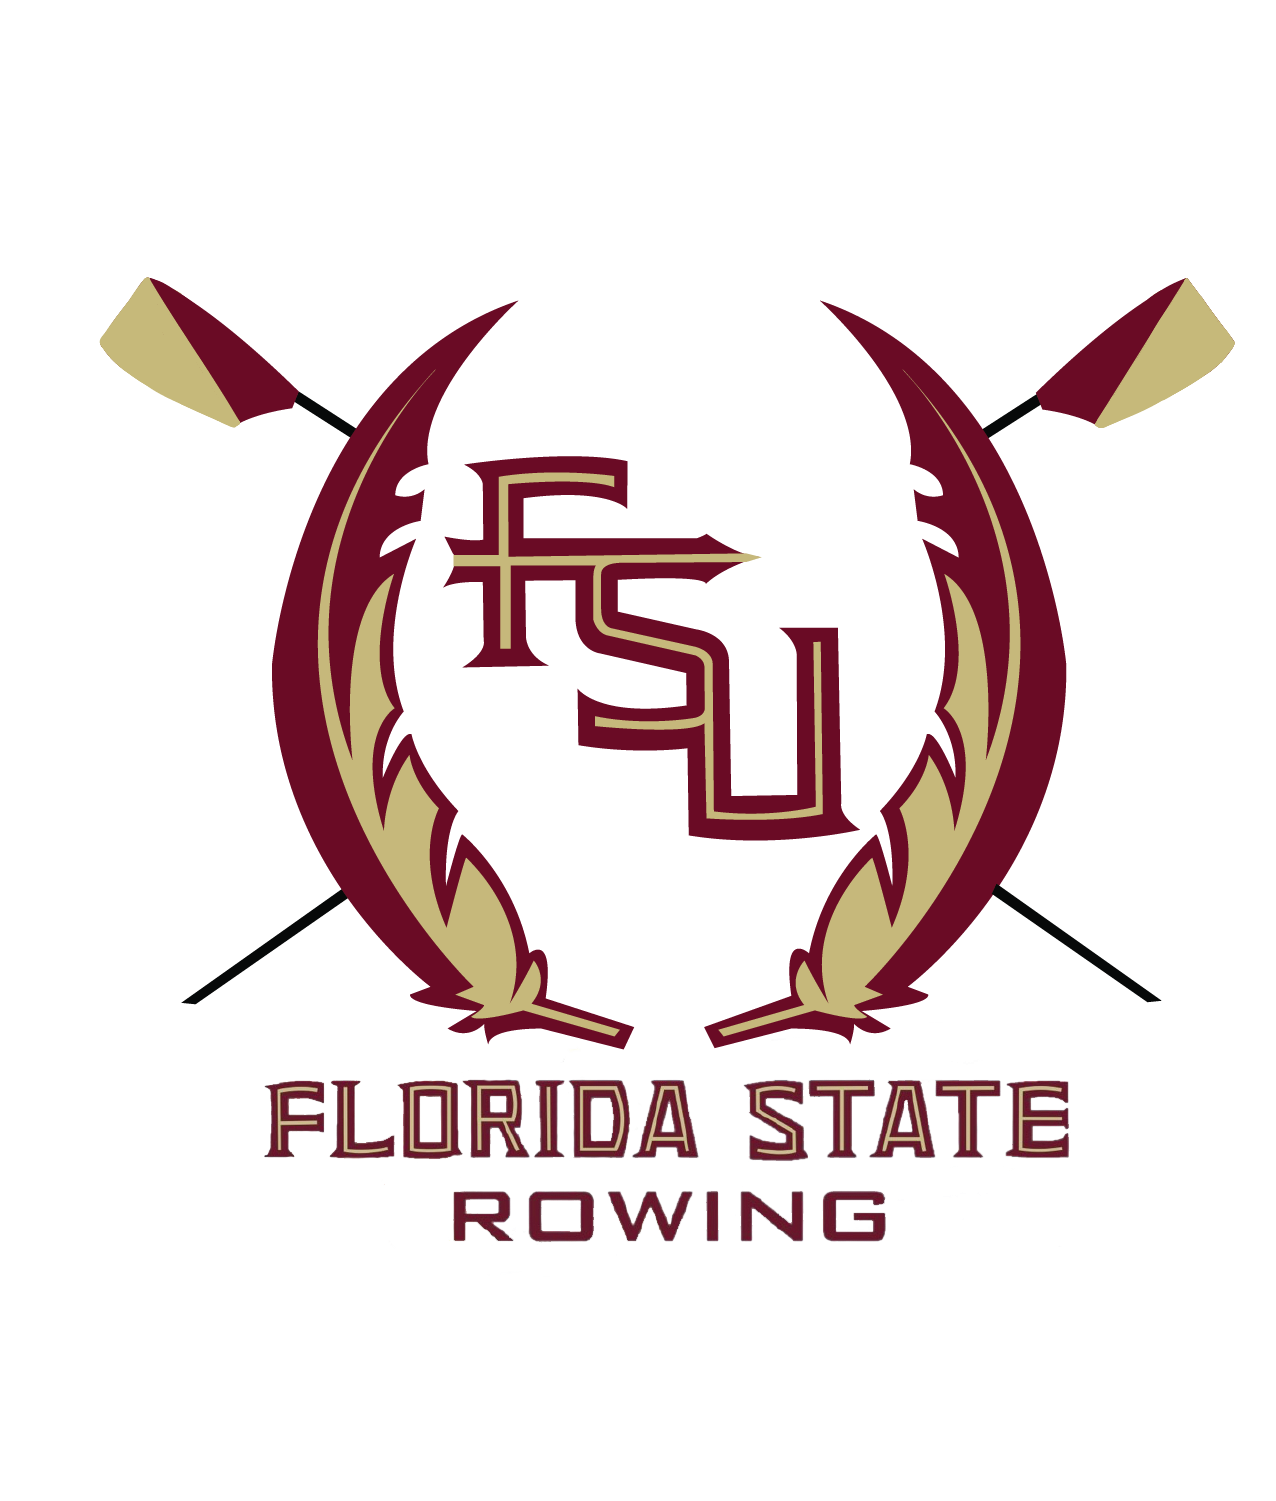 FSU Rowing Alumni Group logo